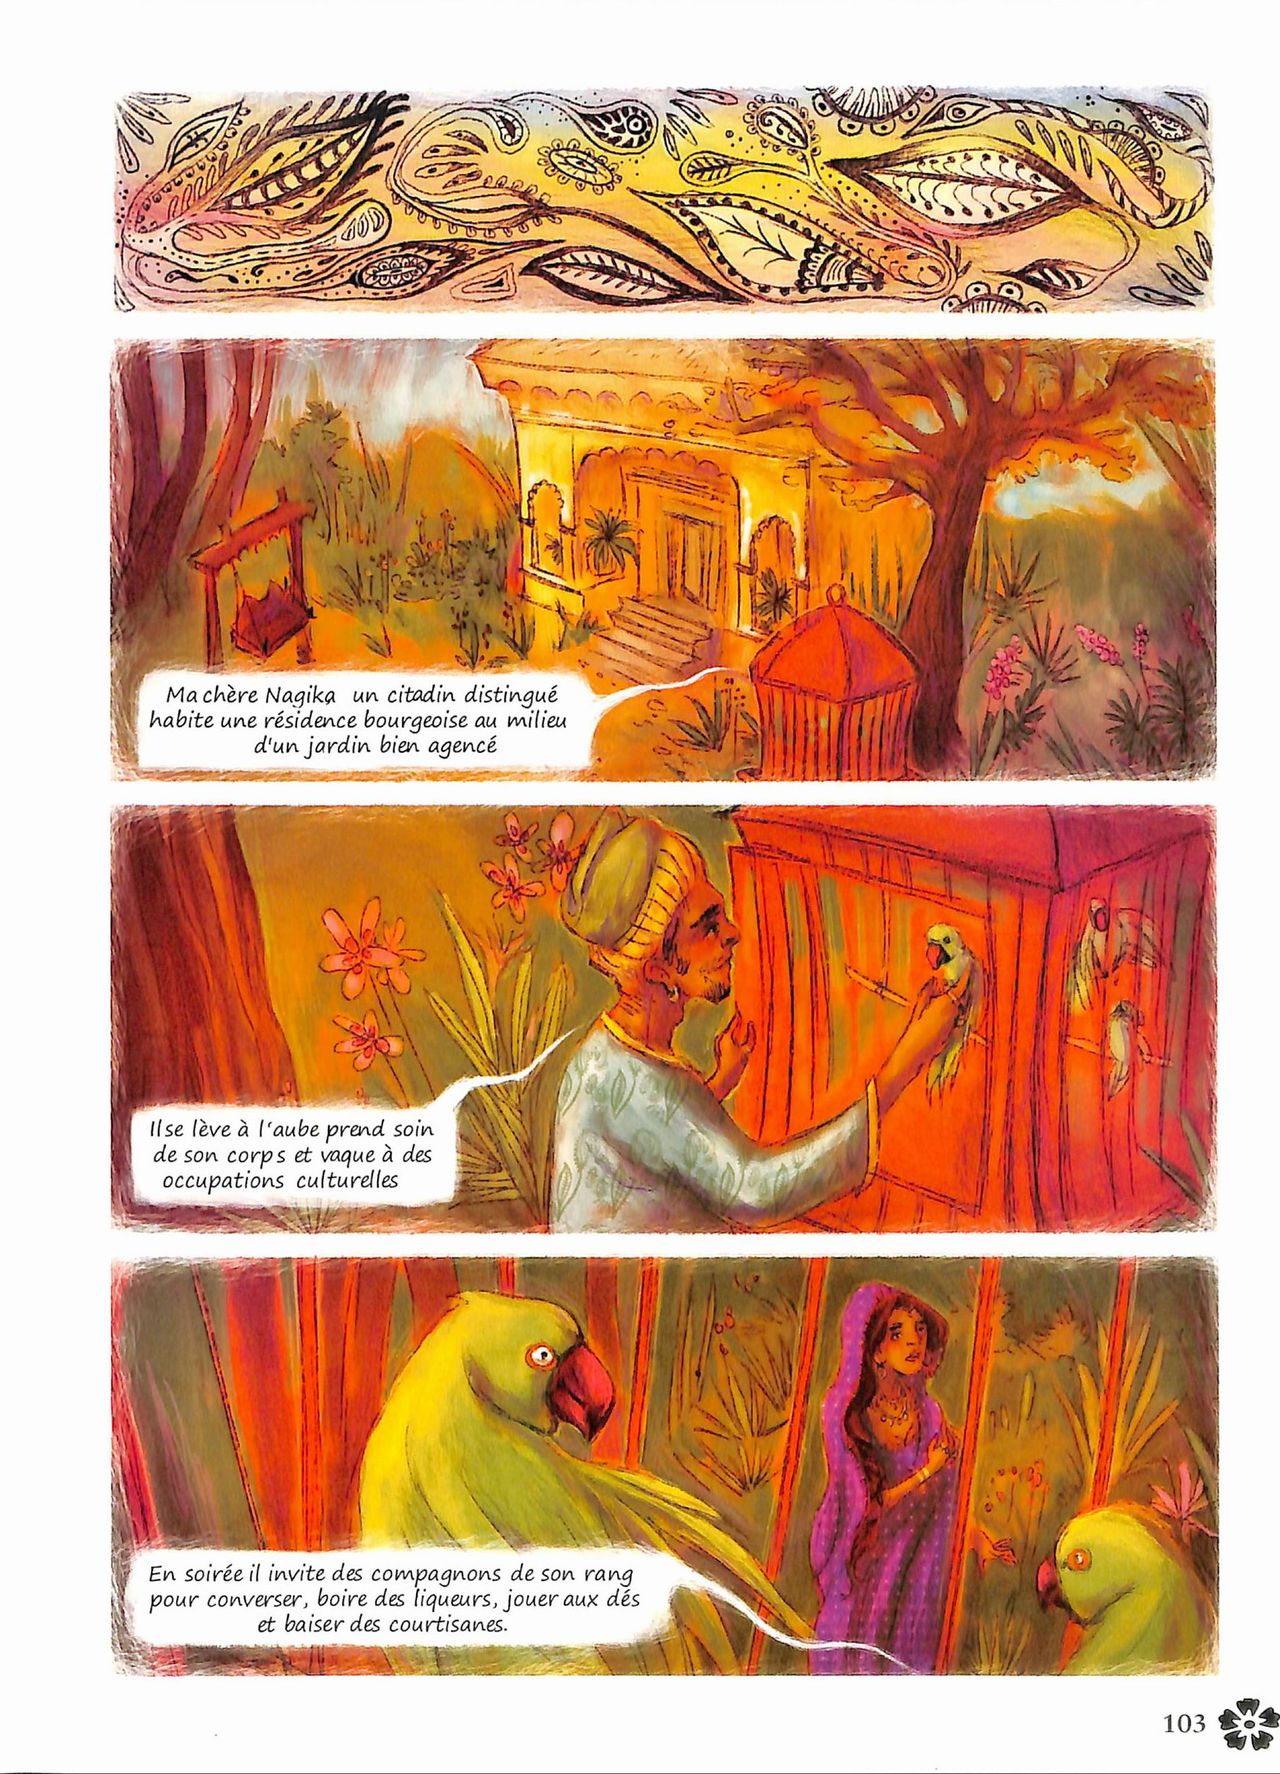 Kama Sutra en bandes dessinées - Kama Sutra with Comics numero d'image 104